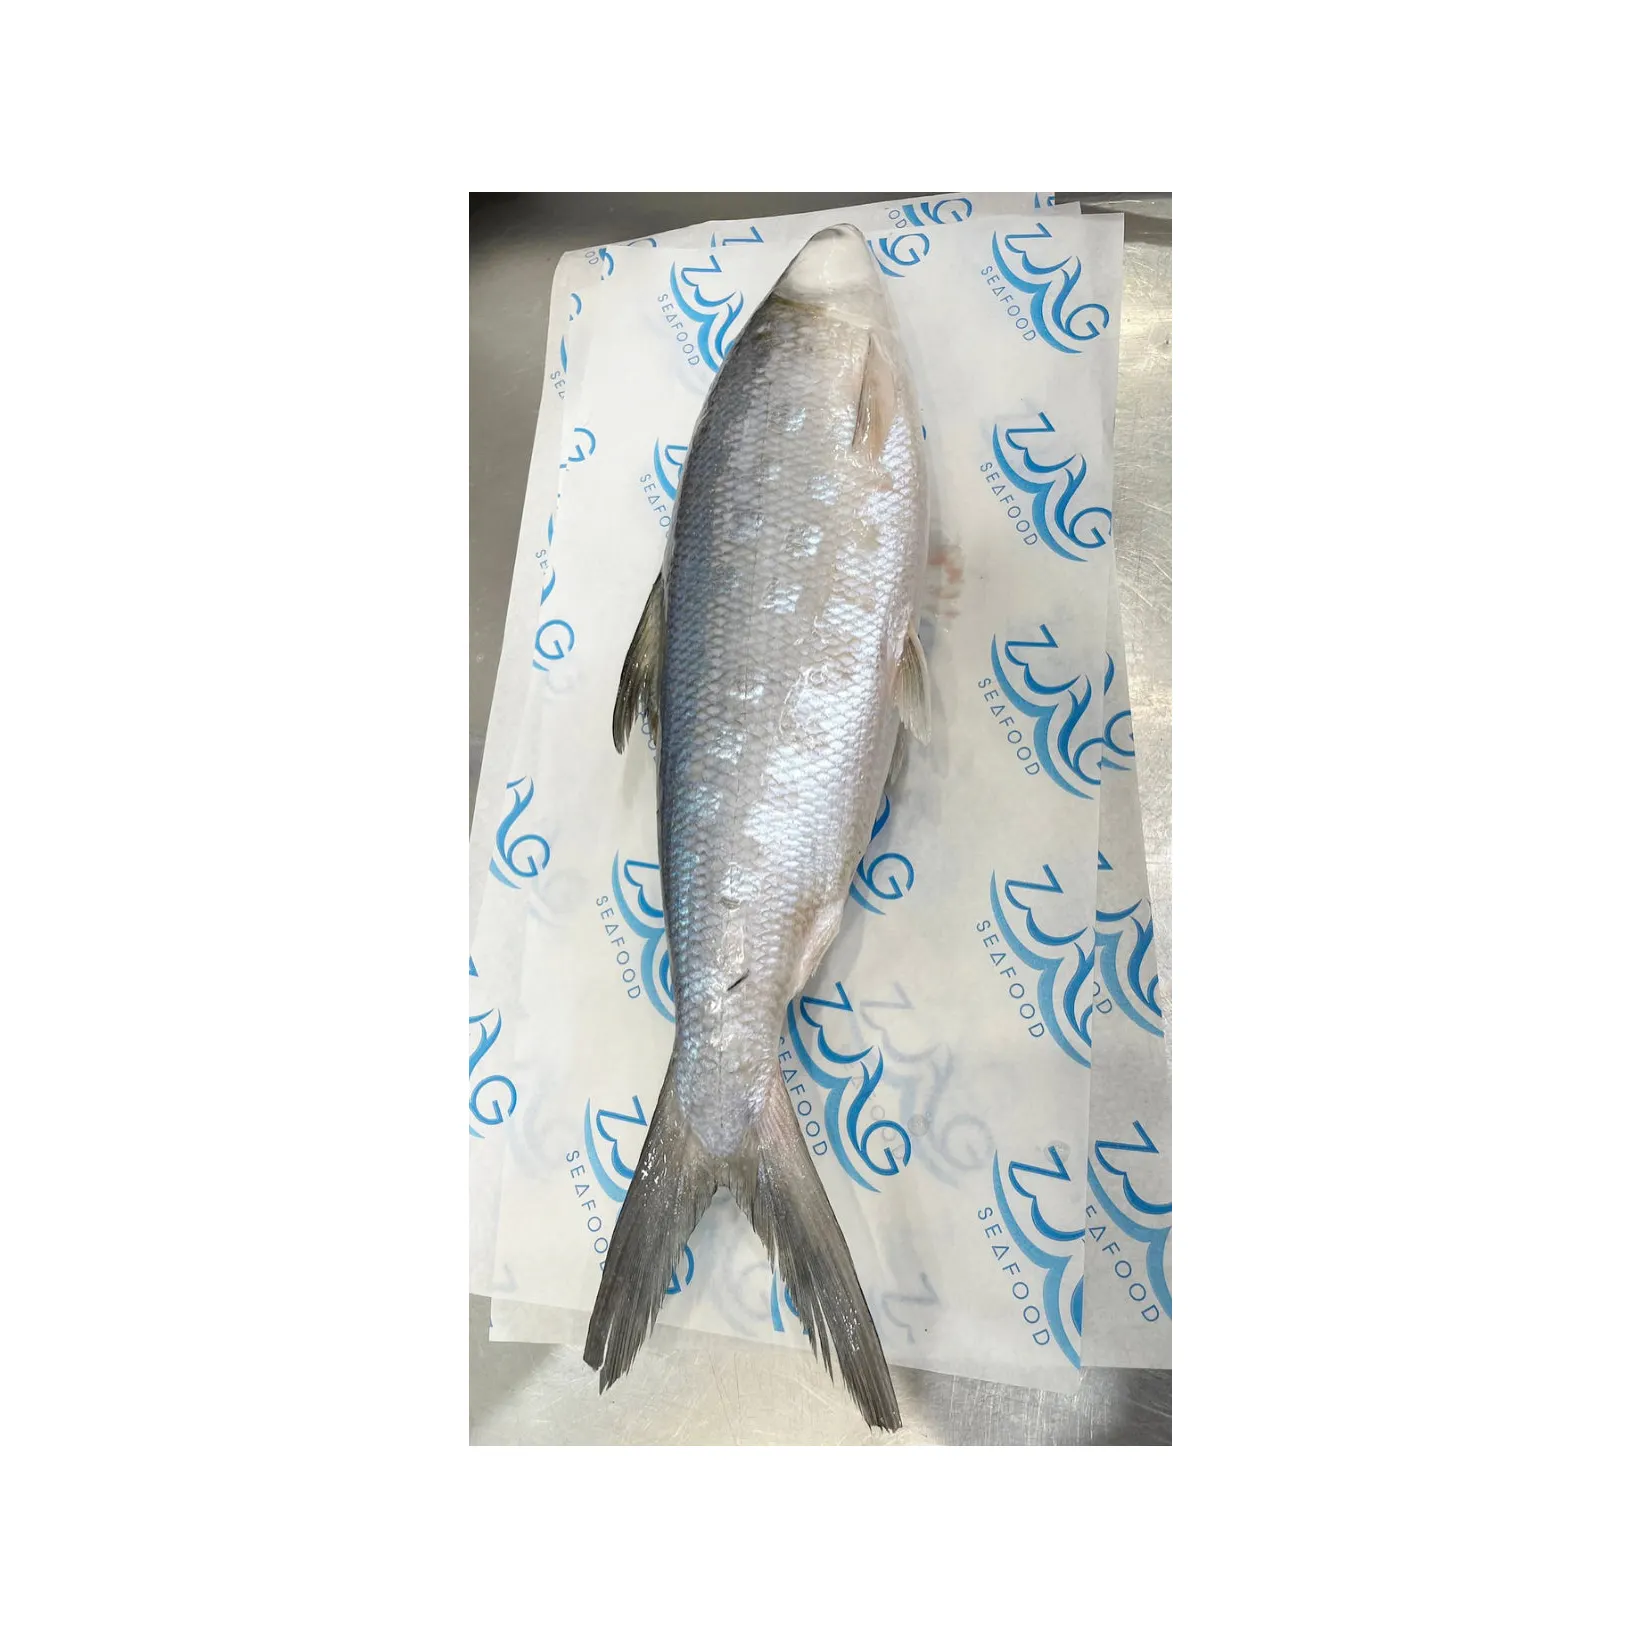 Vente de poisson frais + fruits de mer thon bonite bonite bonifiée